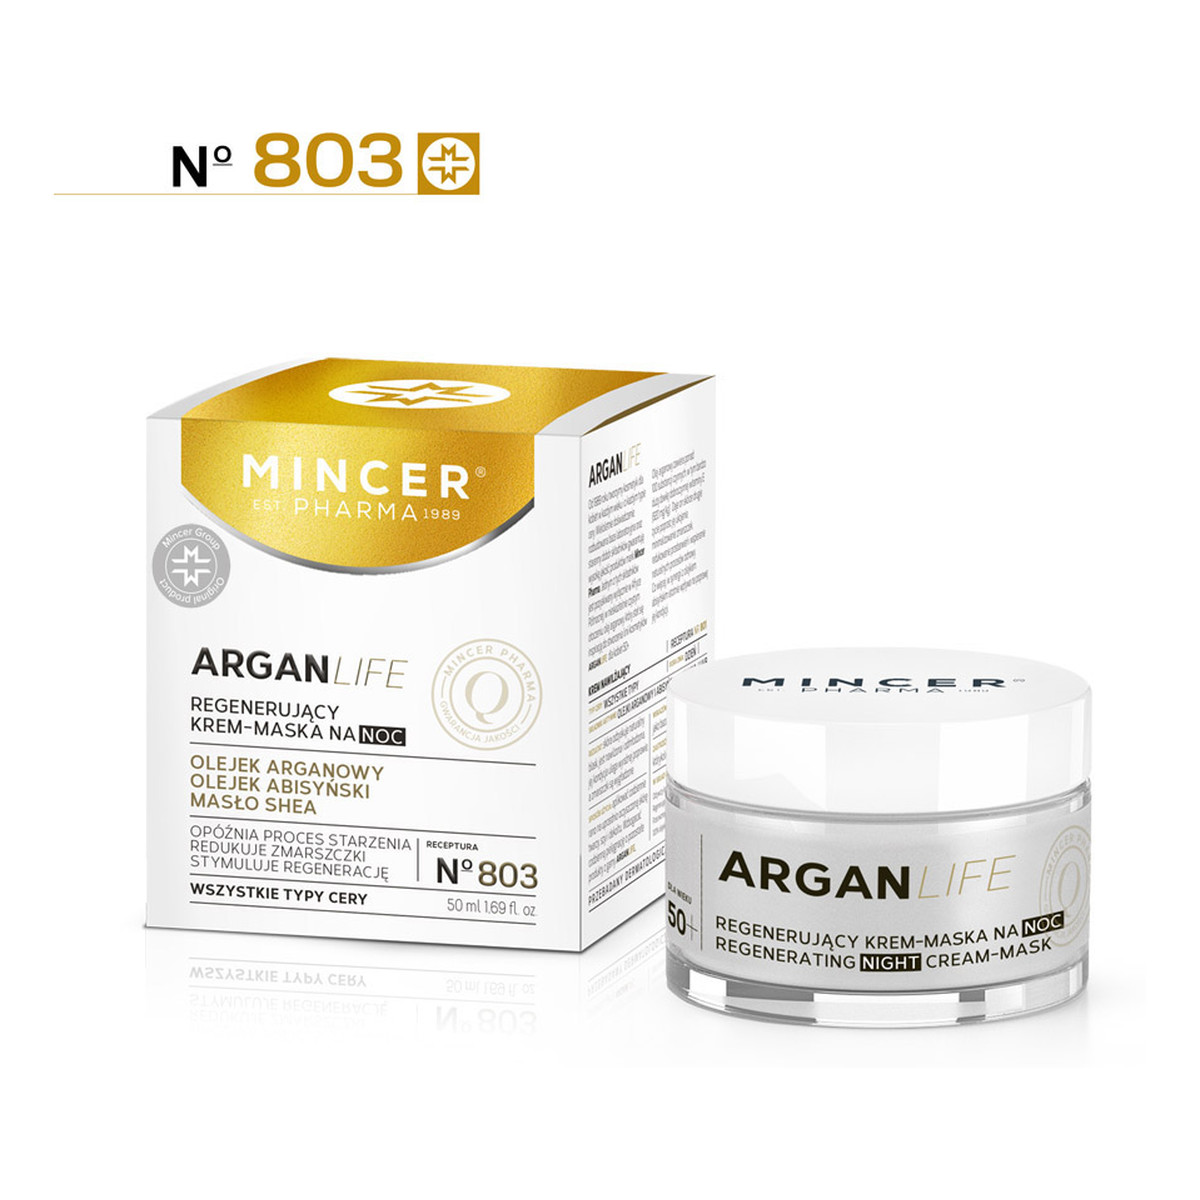 Mincer Pharma Argan Life 50+ Regenerujący Krem-Maska Na Noc No803 50ml